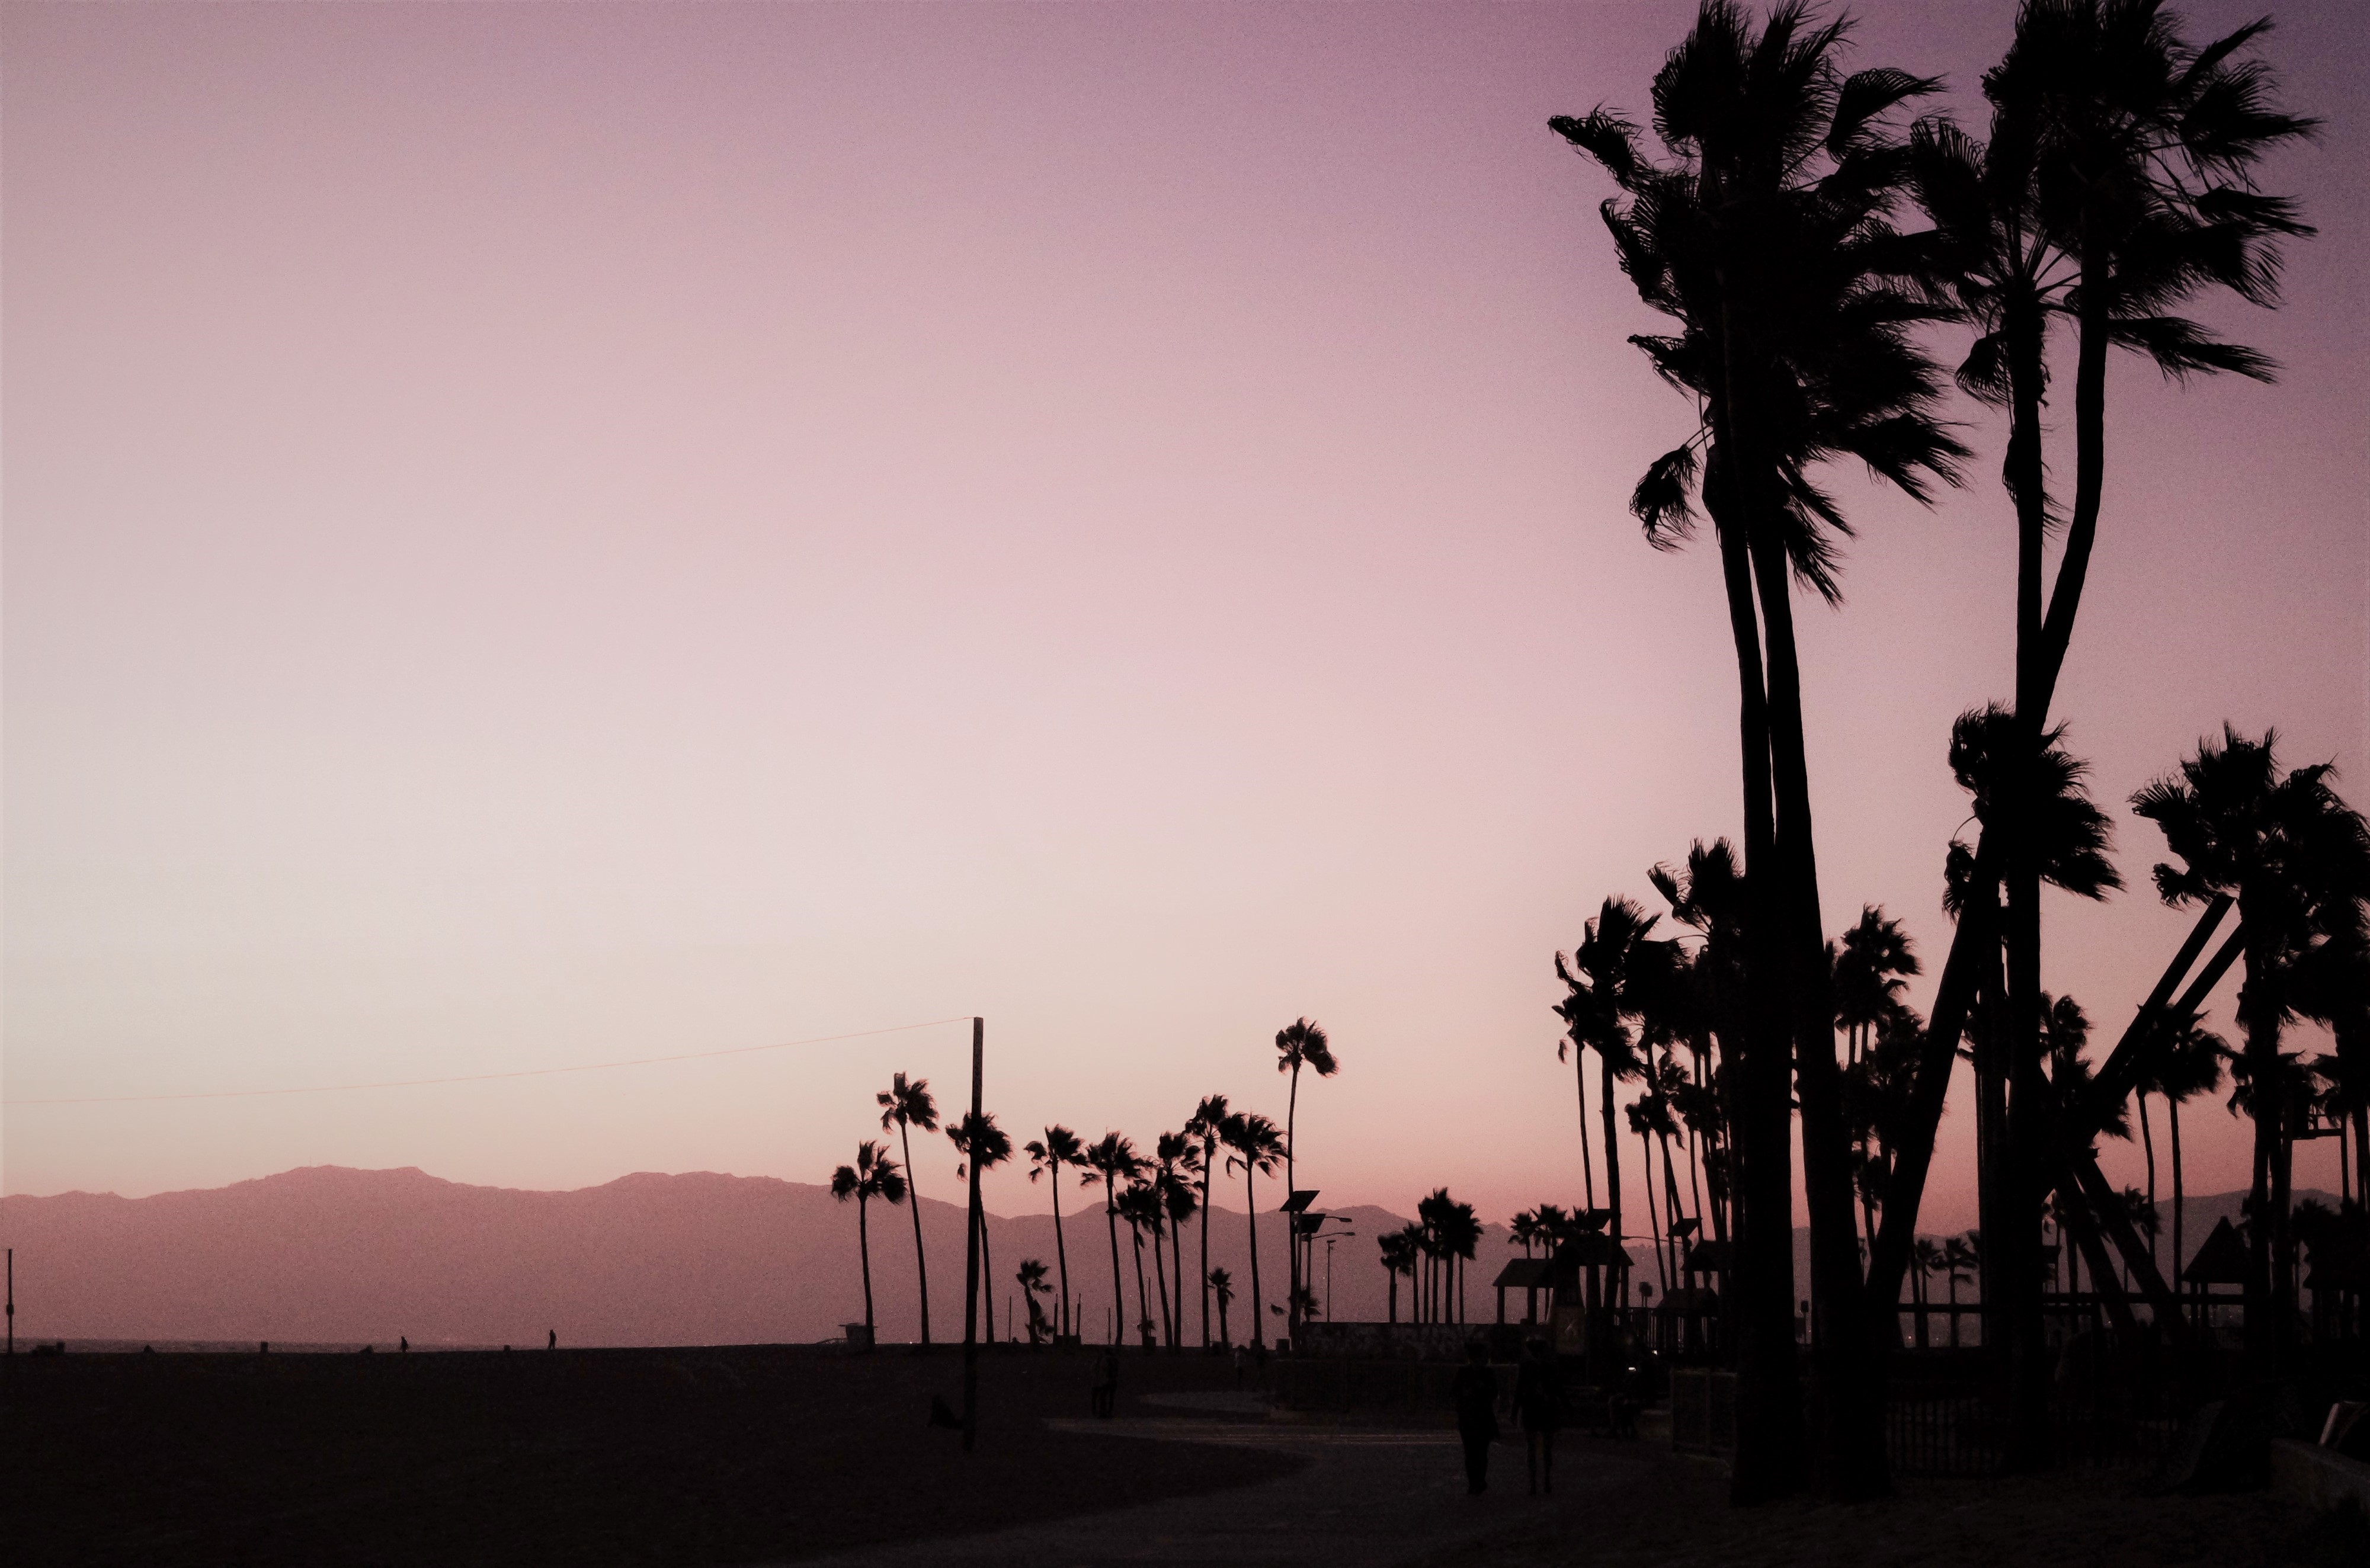 Los Angeles | Venice Beach